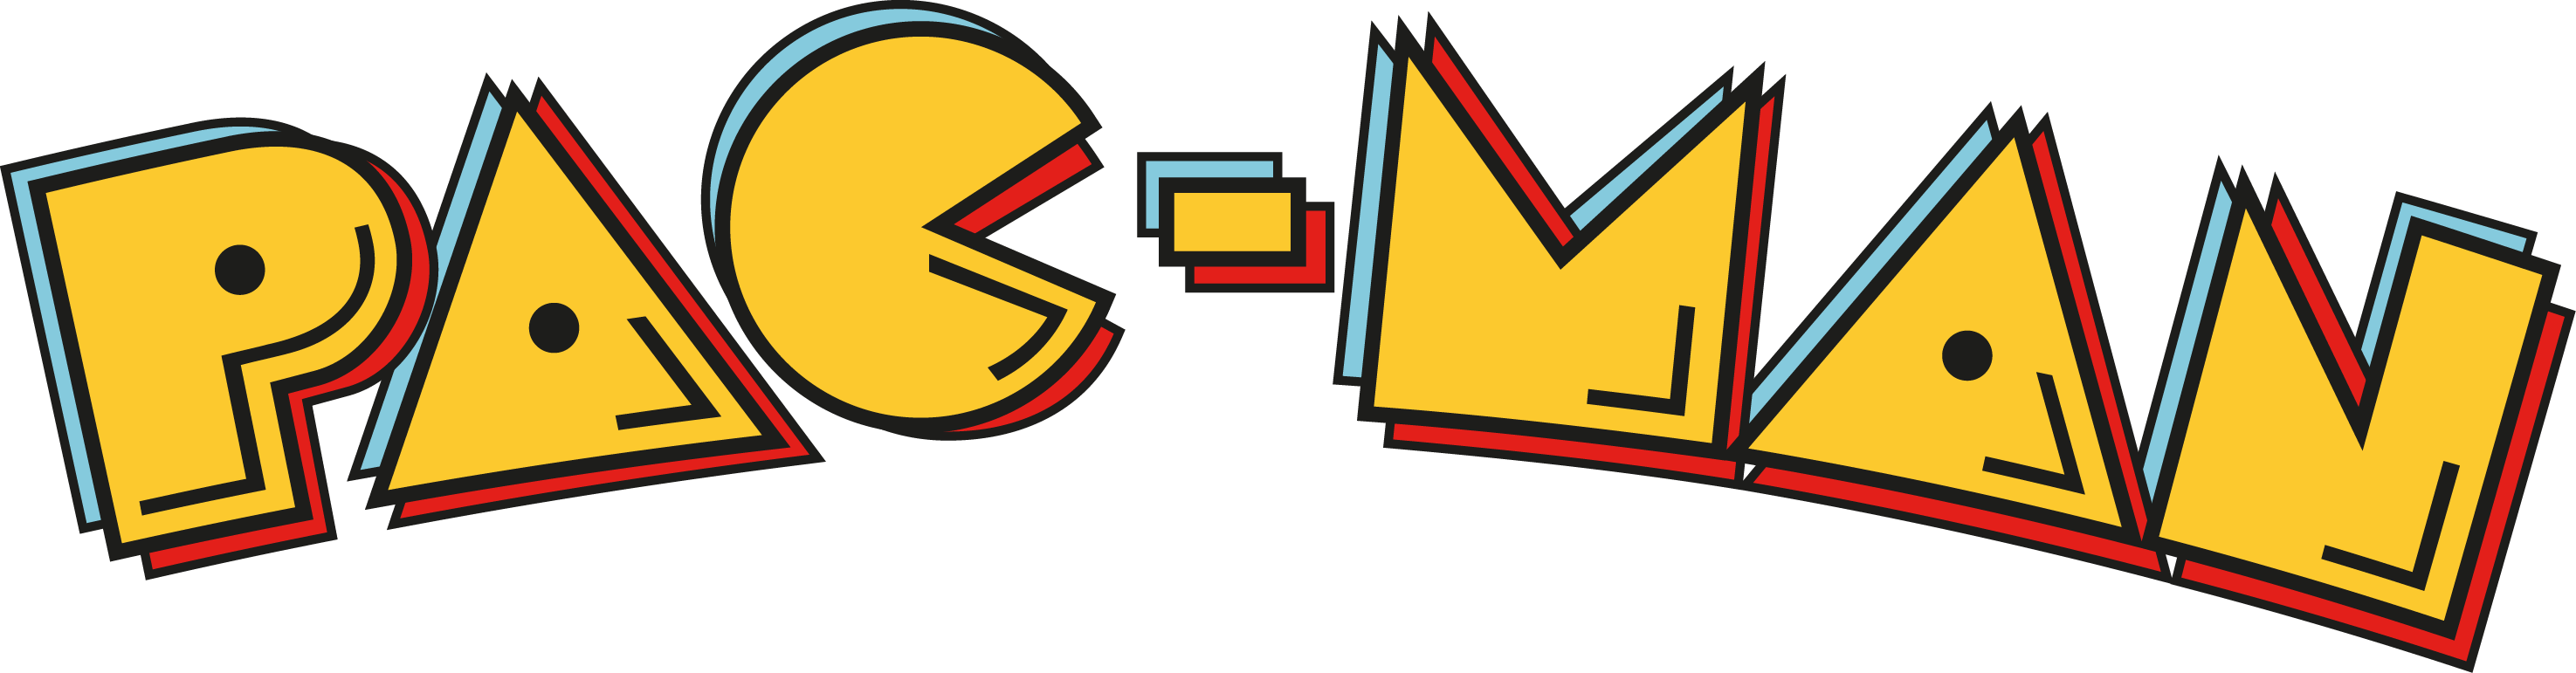 Ms. Pac-Man Logo PNG HD Photos